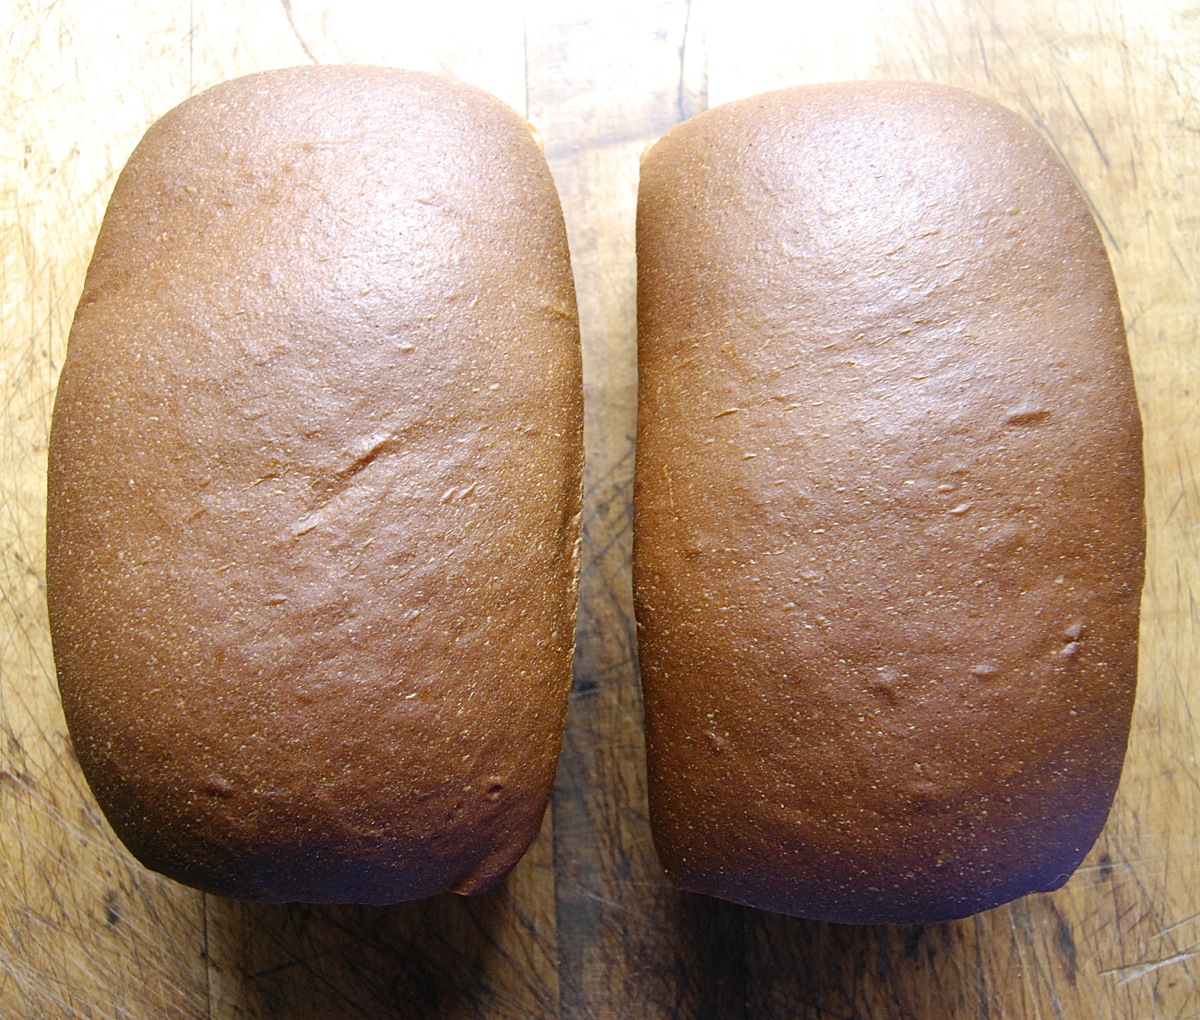 Classic Whole Wheat Sandwich Bread via @kingarthurflour